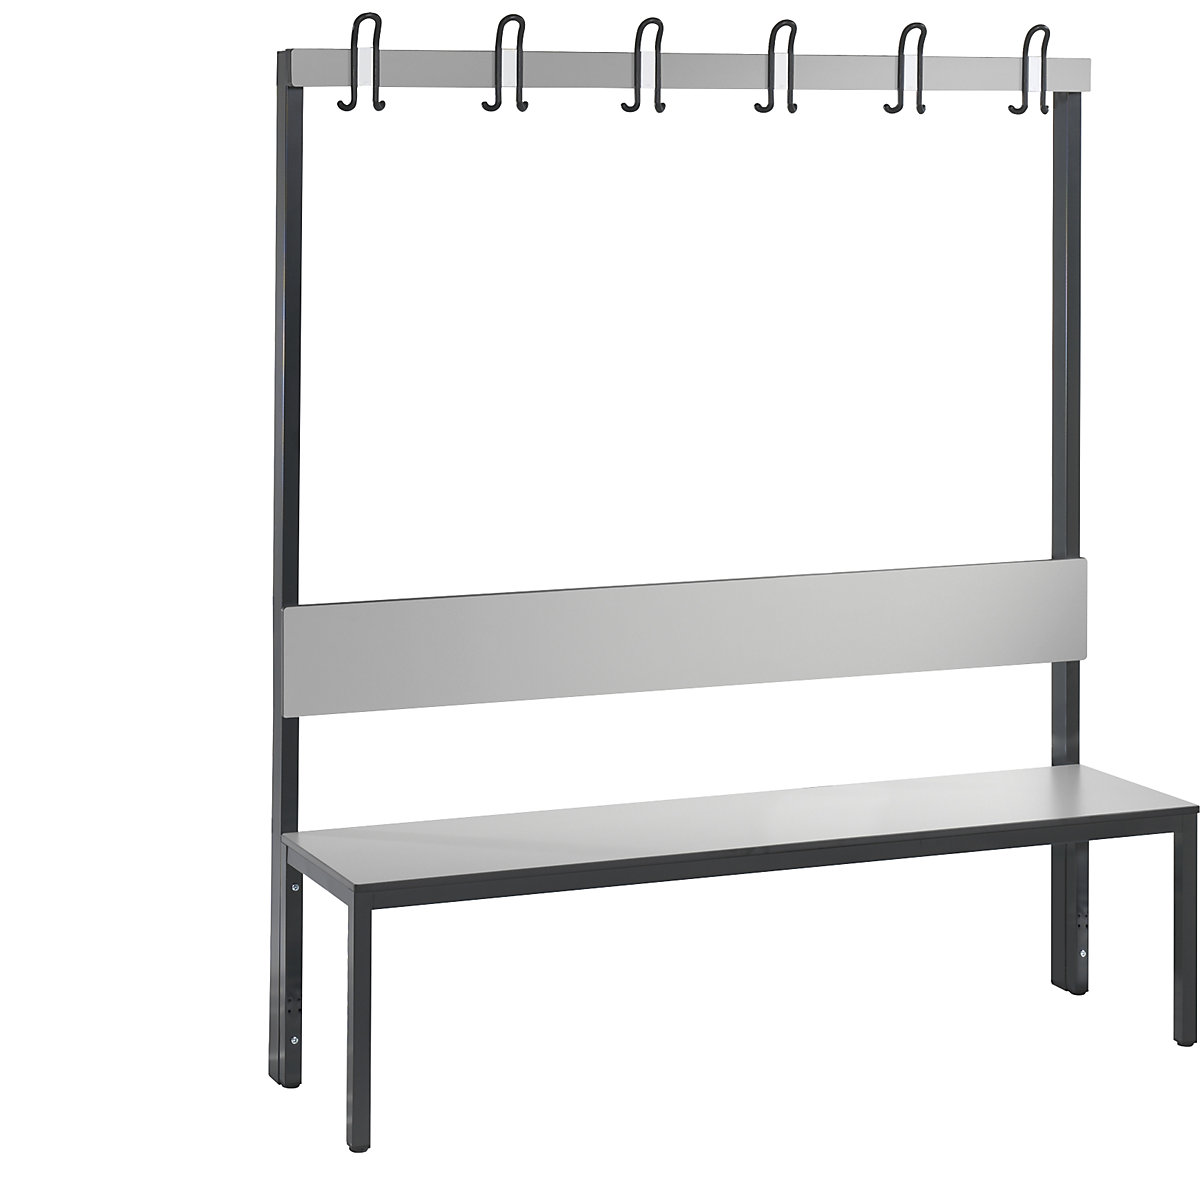 BASIC PLUS cloakroom bench, single sided – C+P, seat HPL, hook rail, length 1500 mm, silver grey-9